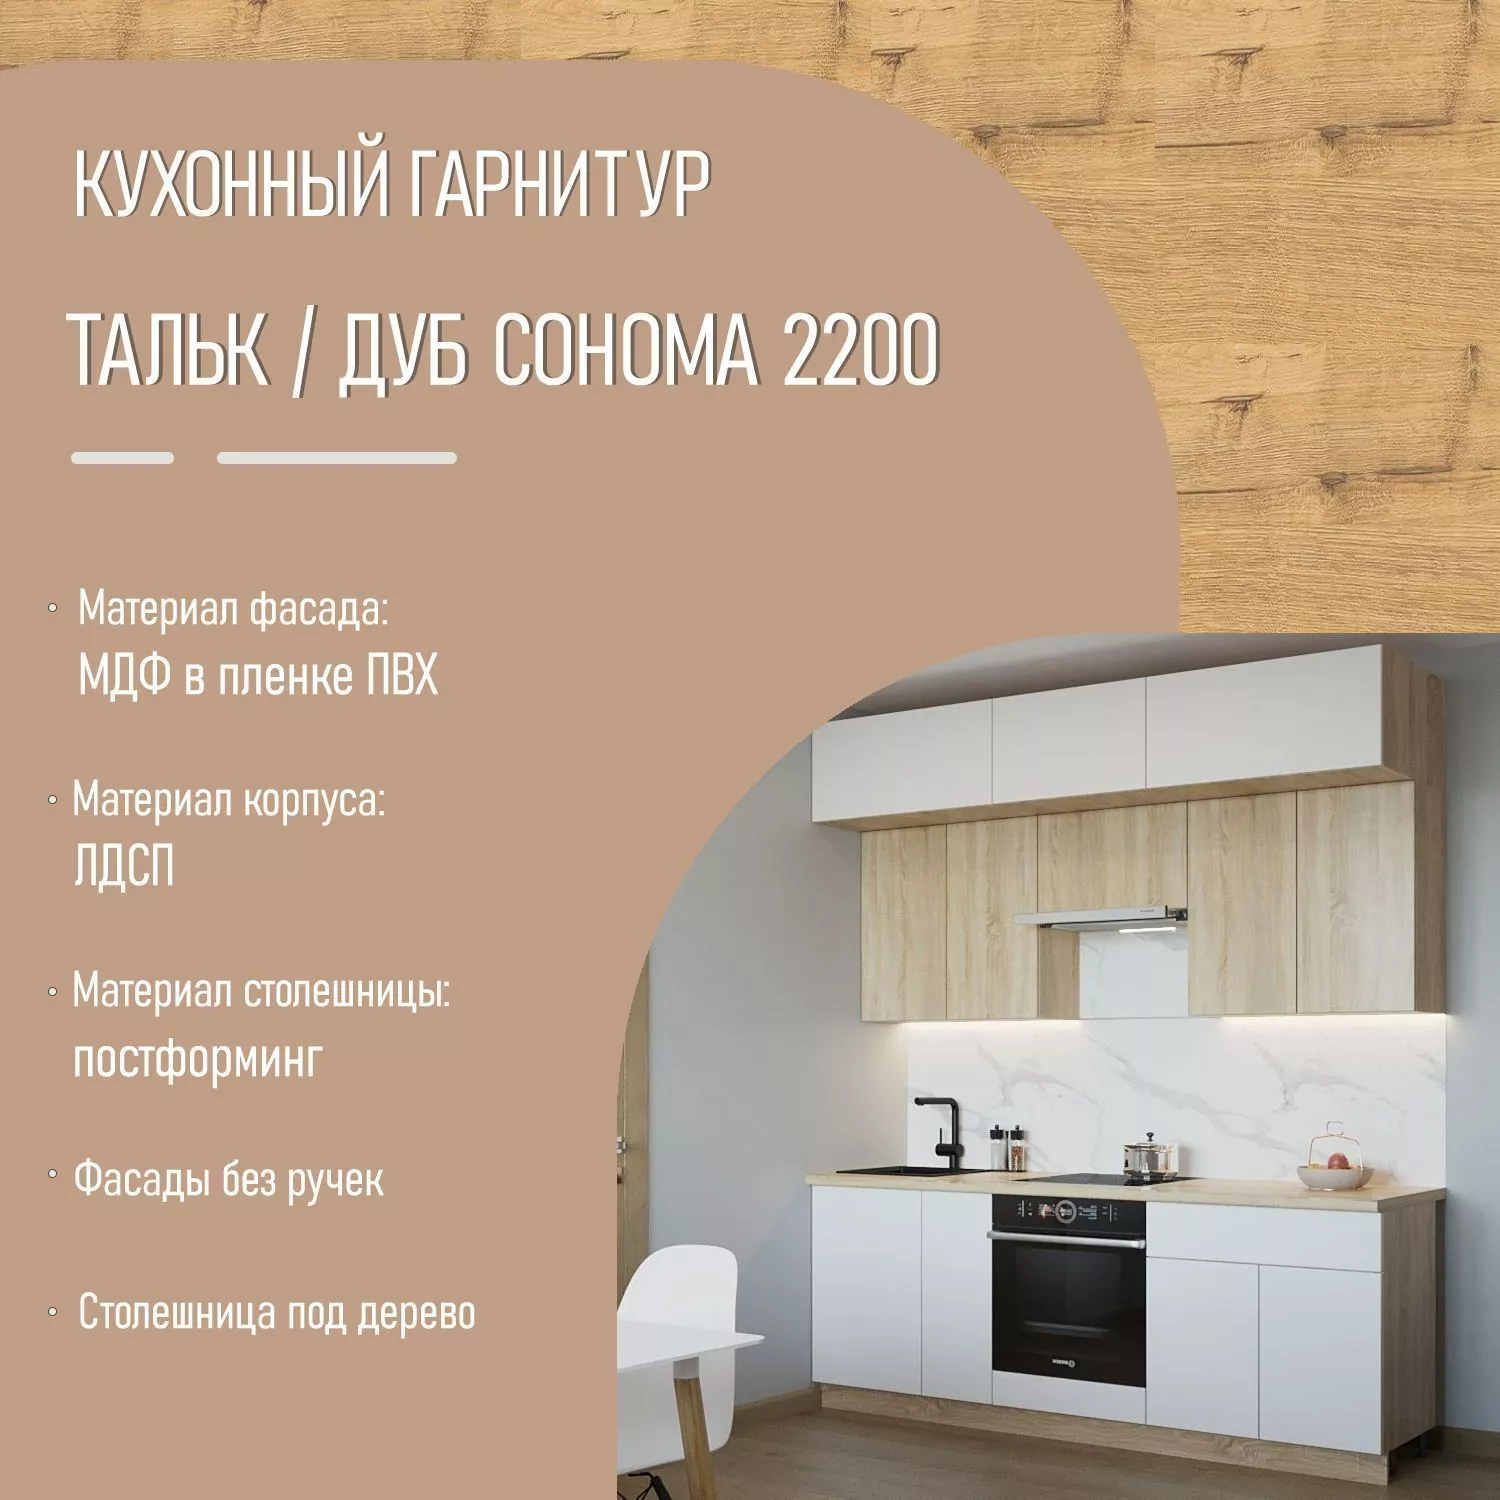 Кухонный гарнитур с антресолями под потолок Тальк / Дуб сонома 2200 (арт.1)